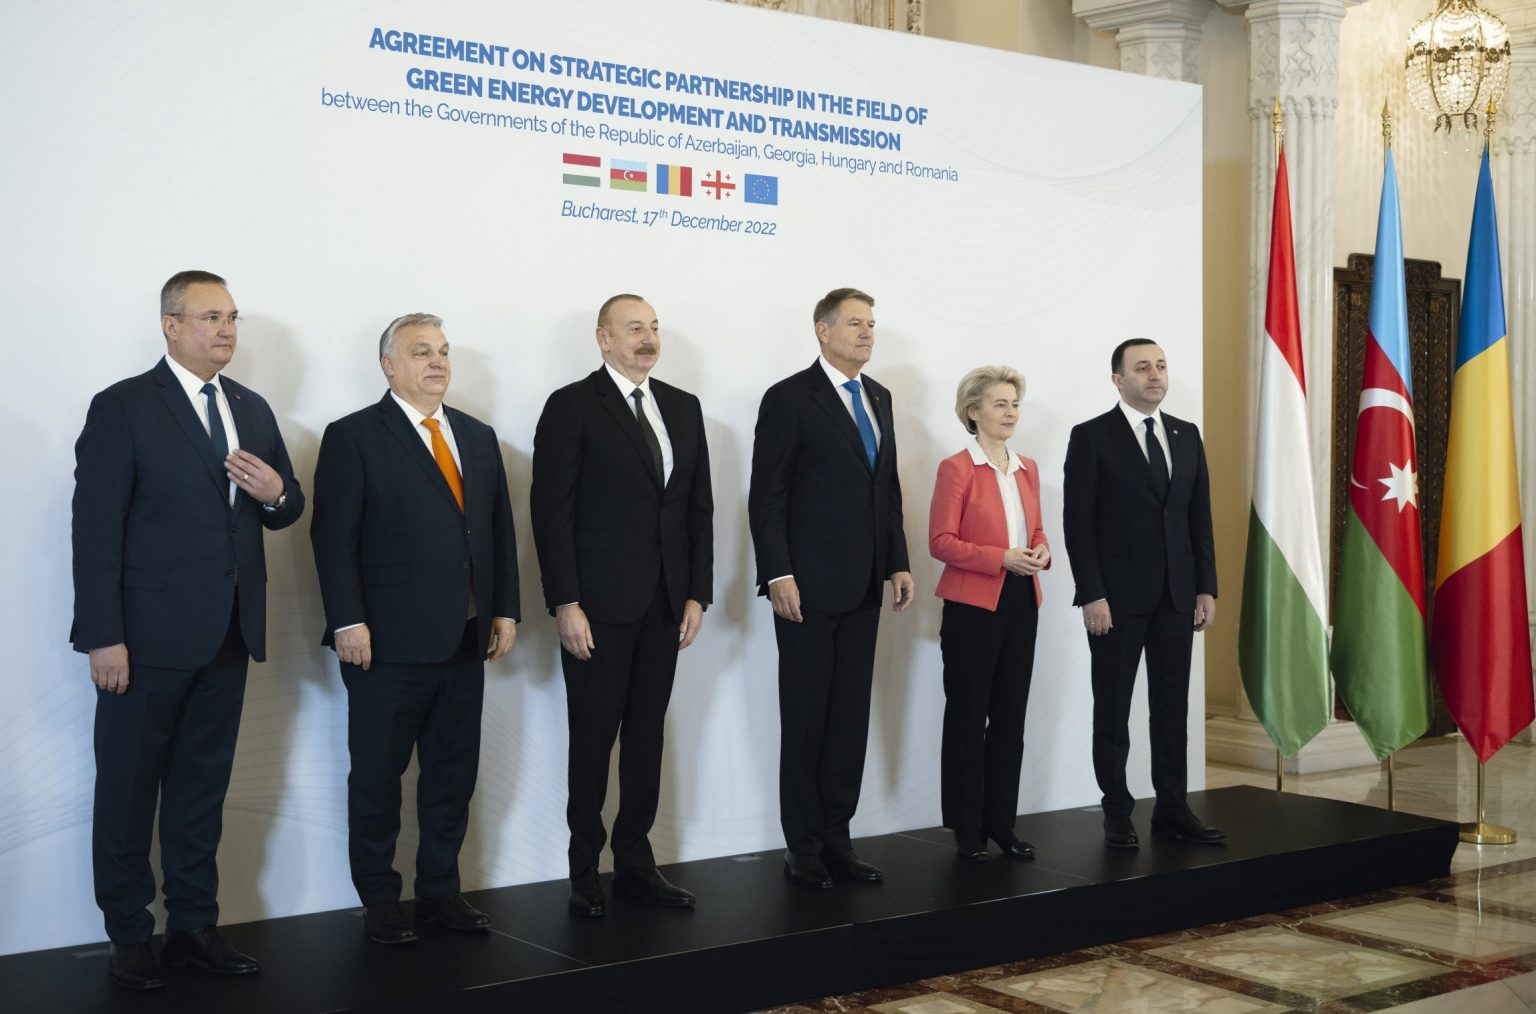 Nicolae Ciuca, Viktor Orbán, Ilham Alijev, Klaus Iohannis, Ursula von der Leyen a Irakli Garibashvili v Bukurešti